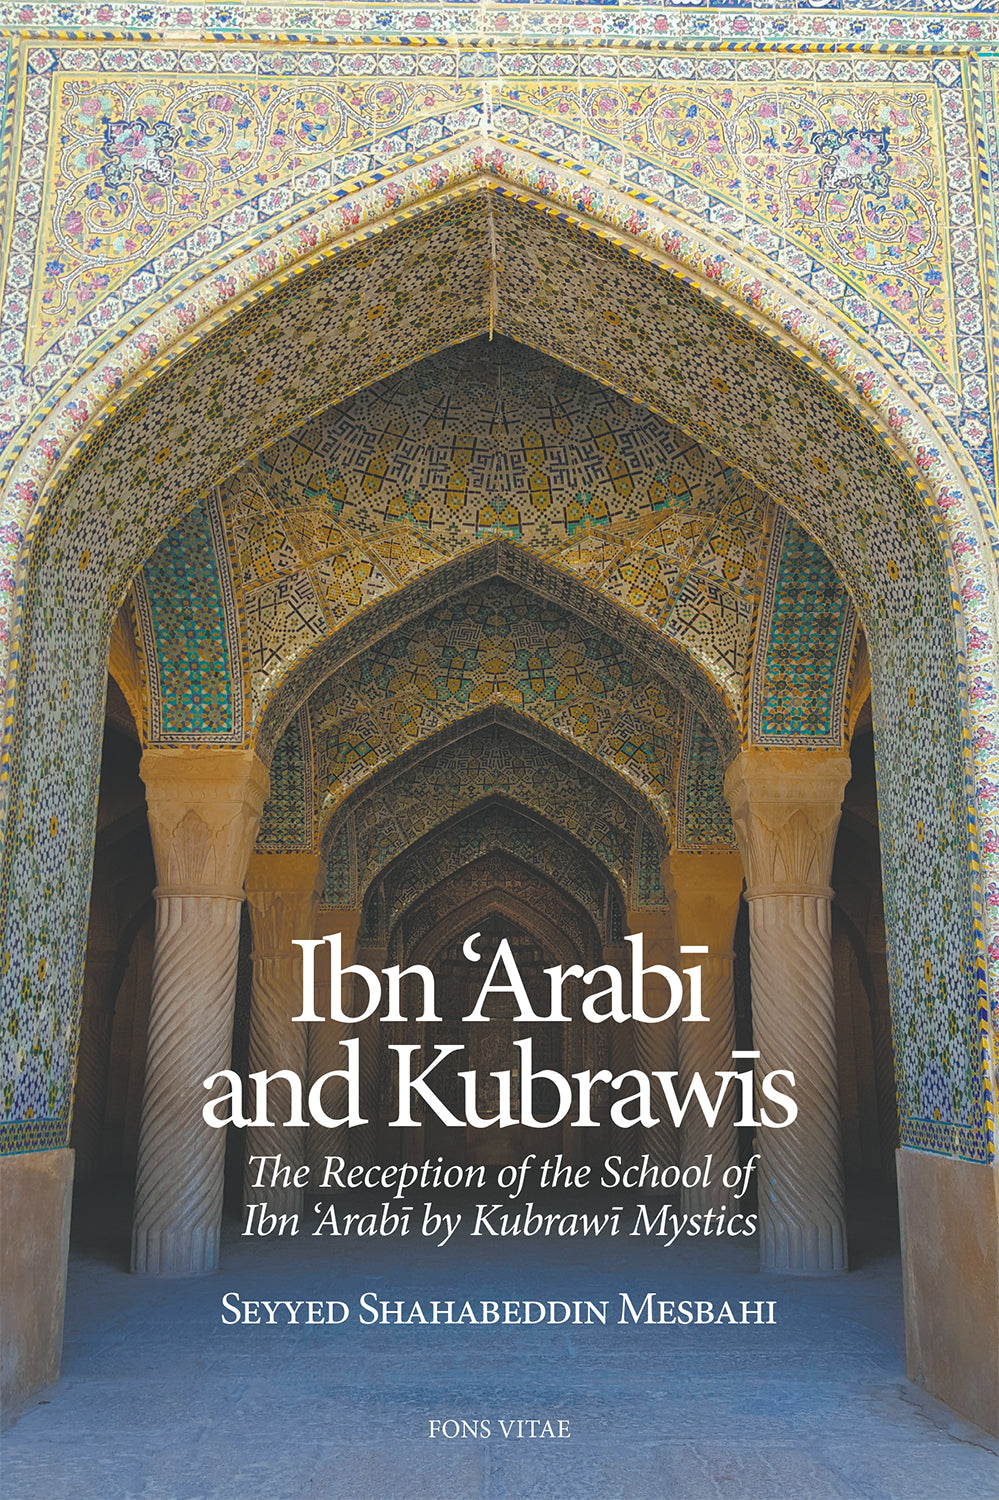 Ibn Arabi and Kubrawis: the Reception of the School of Ibn Arabi by Kubrawi Mystics